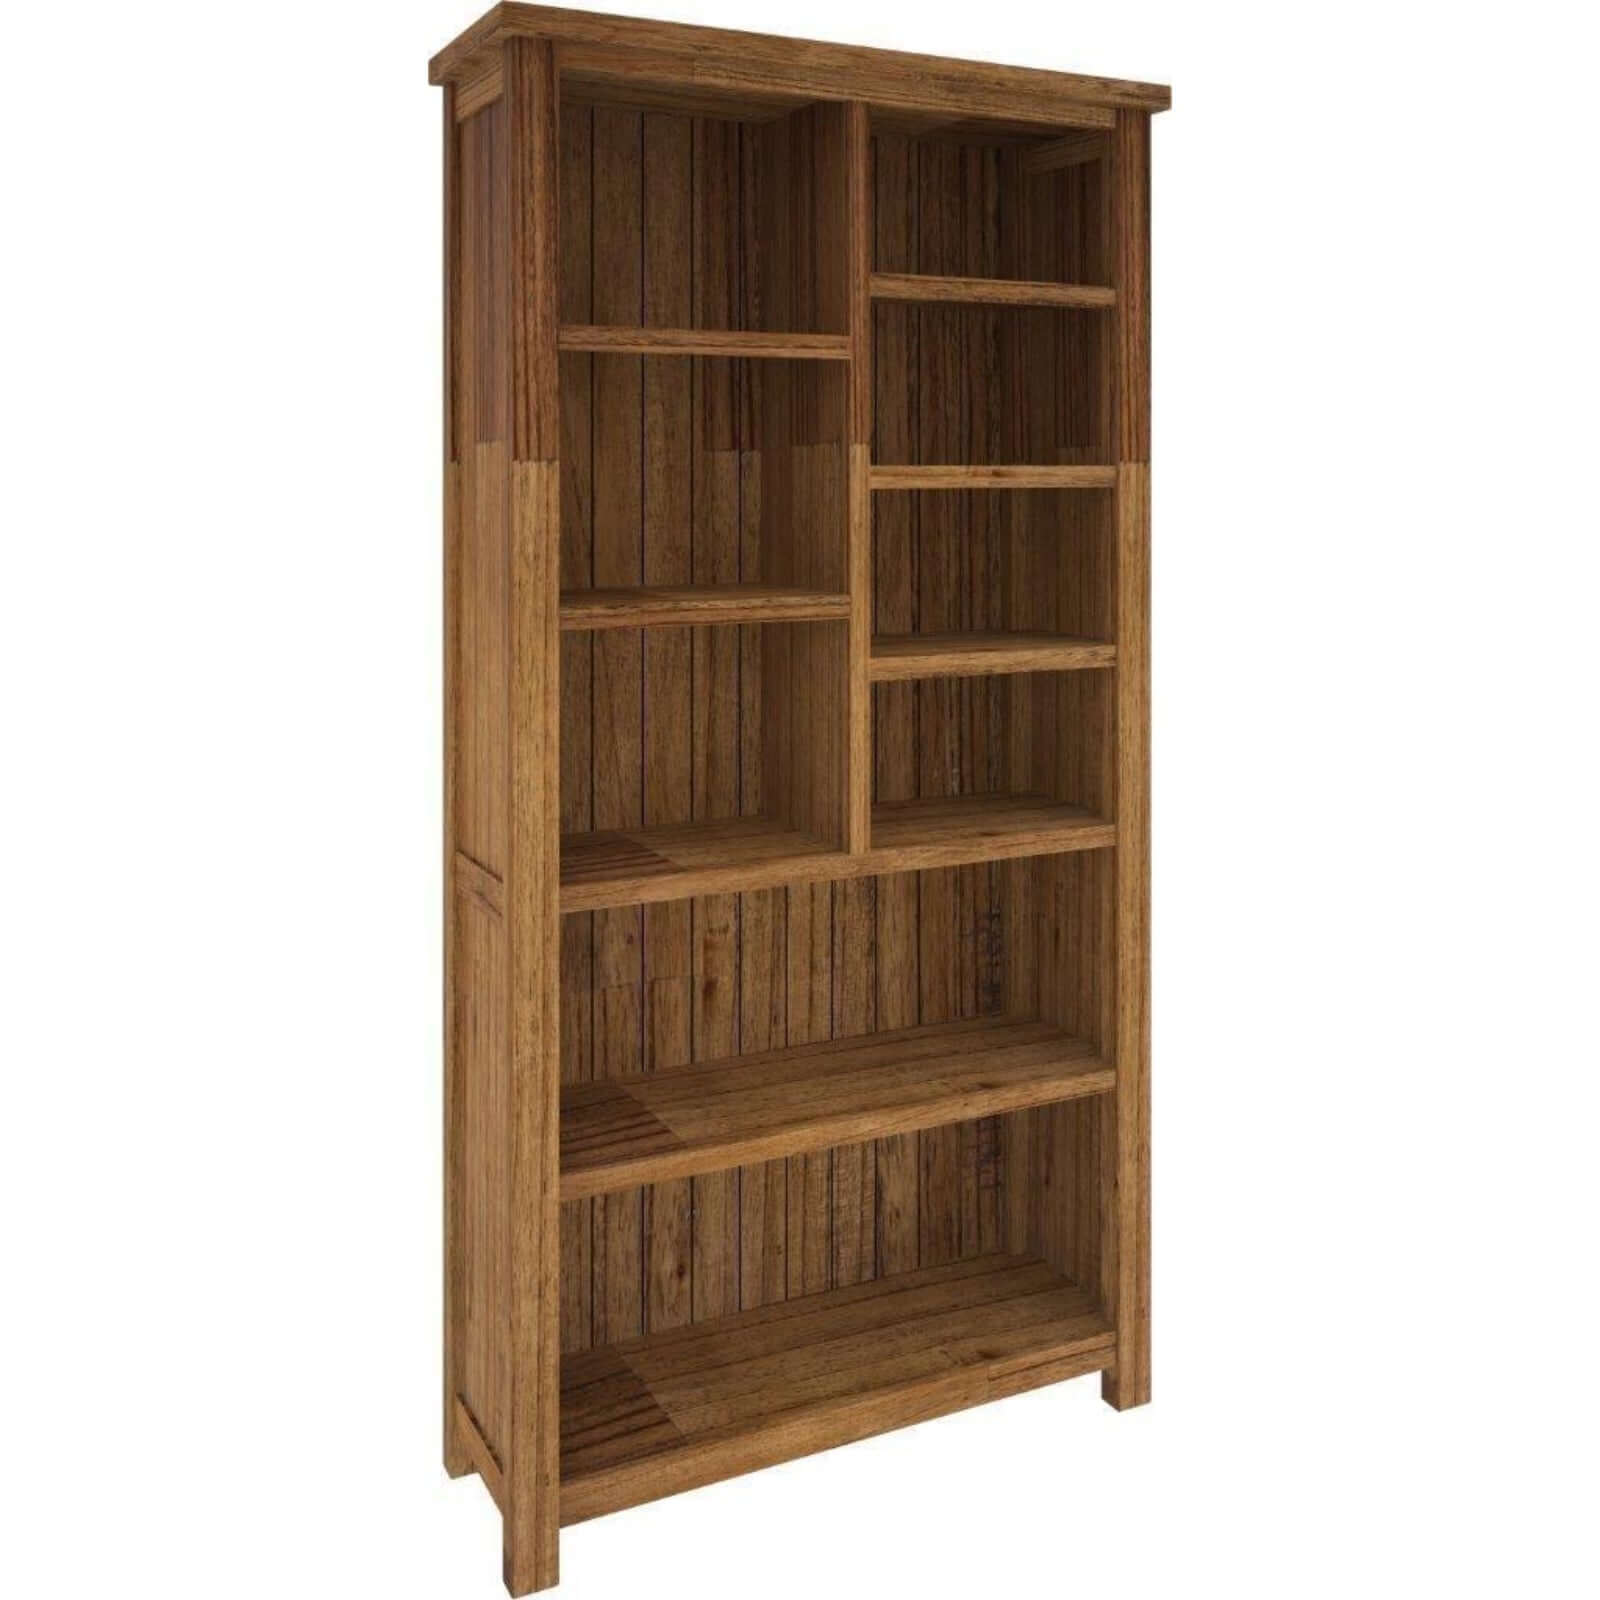 Birdsville Bookshelf Bookcase Display Unit Solid Mt Ash Timber Wood - Brown-Upinteriors